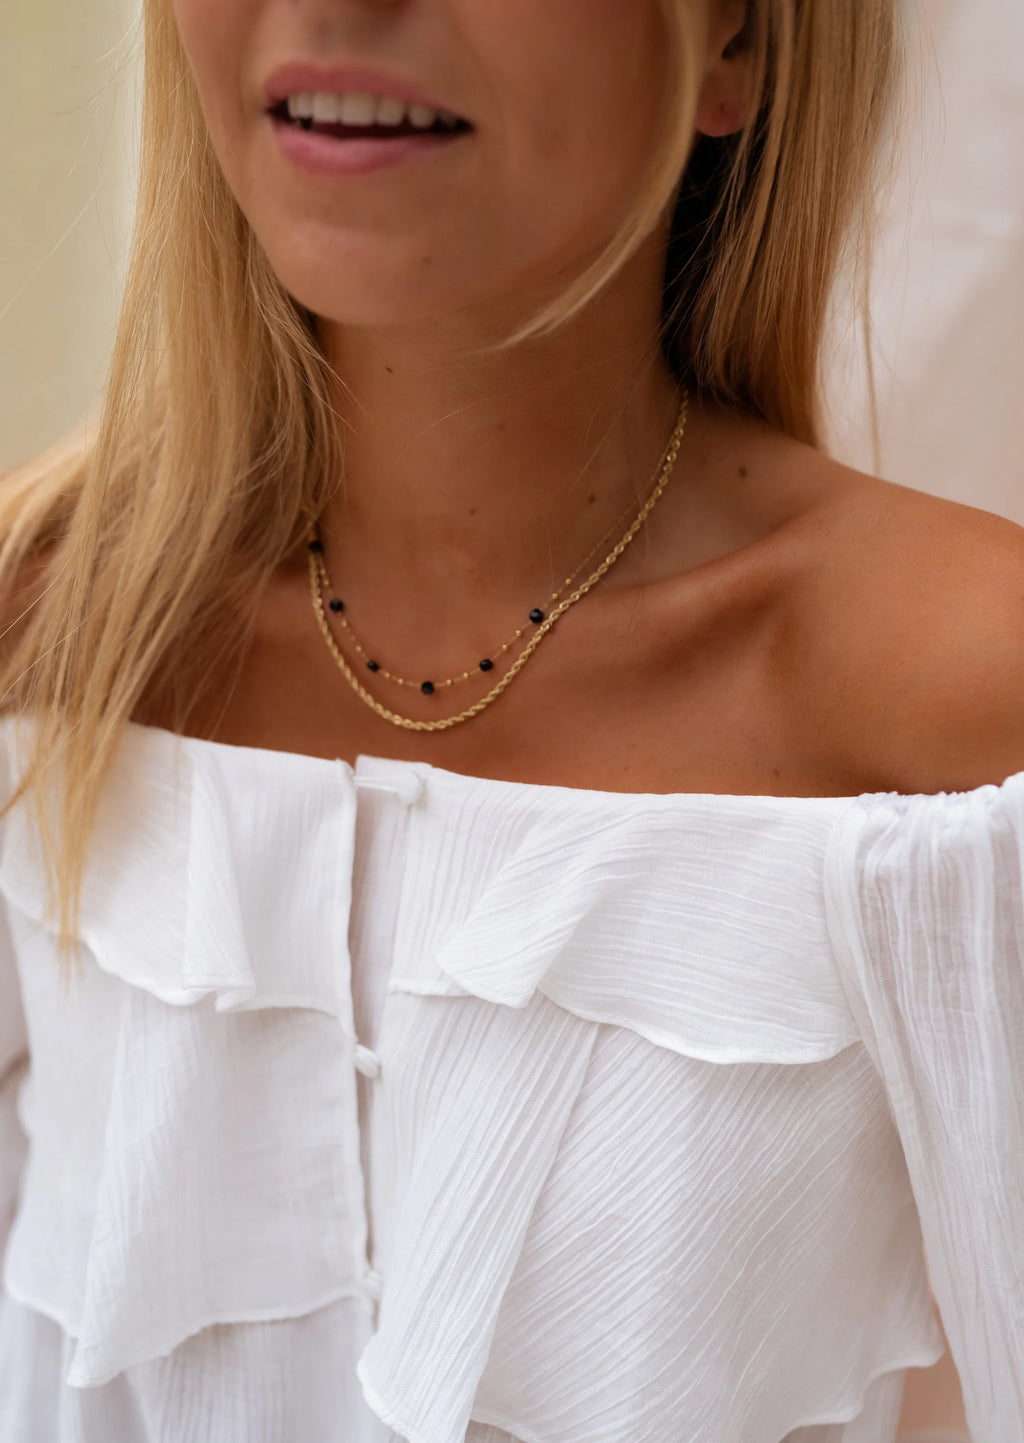 PRUDA necklace - Golden And Black